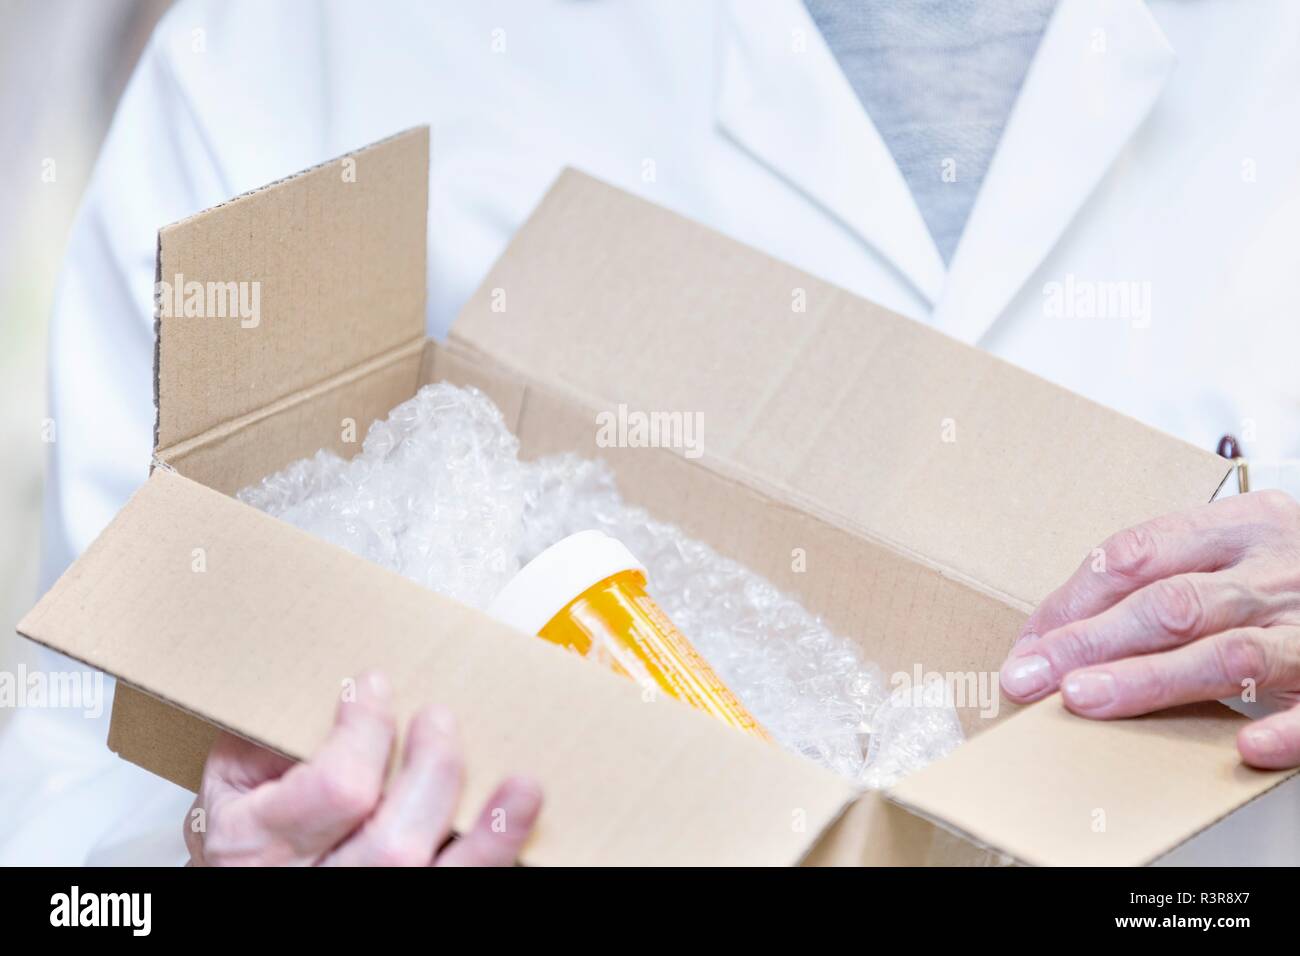 Pharmacist opening box containing medicine. Stock Photo